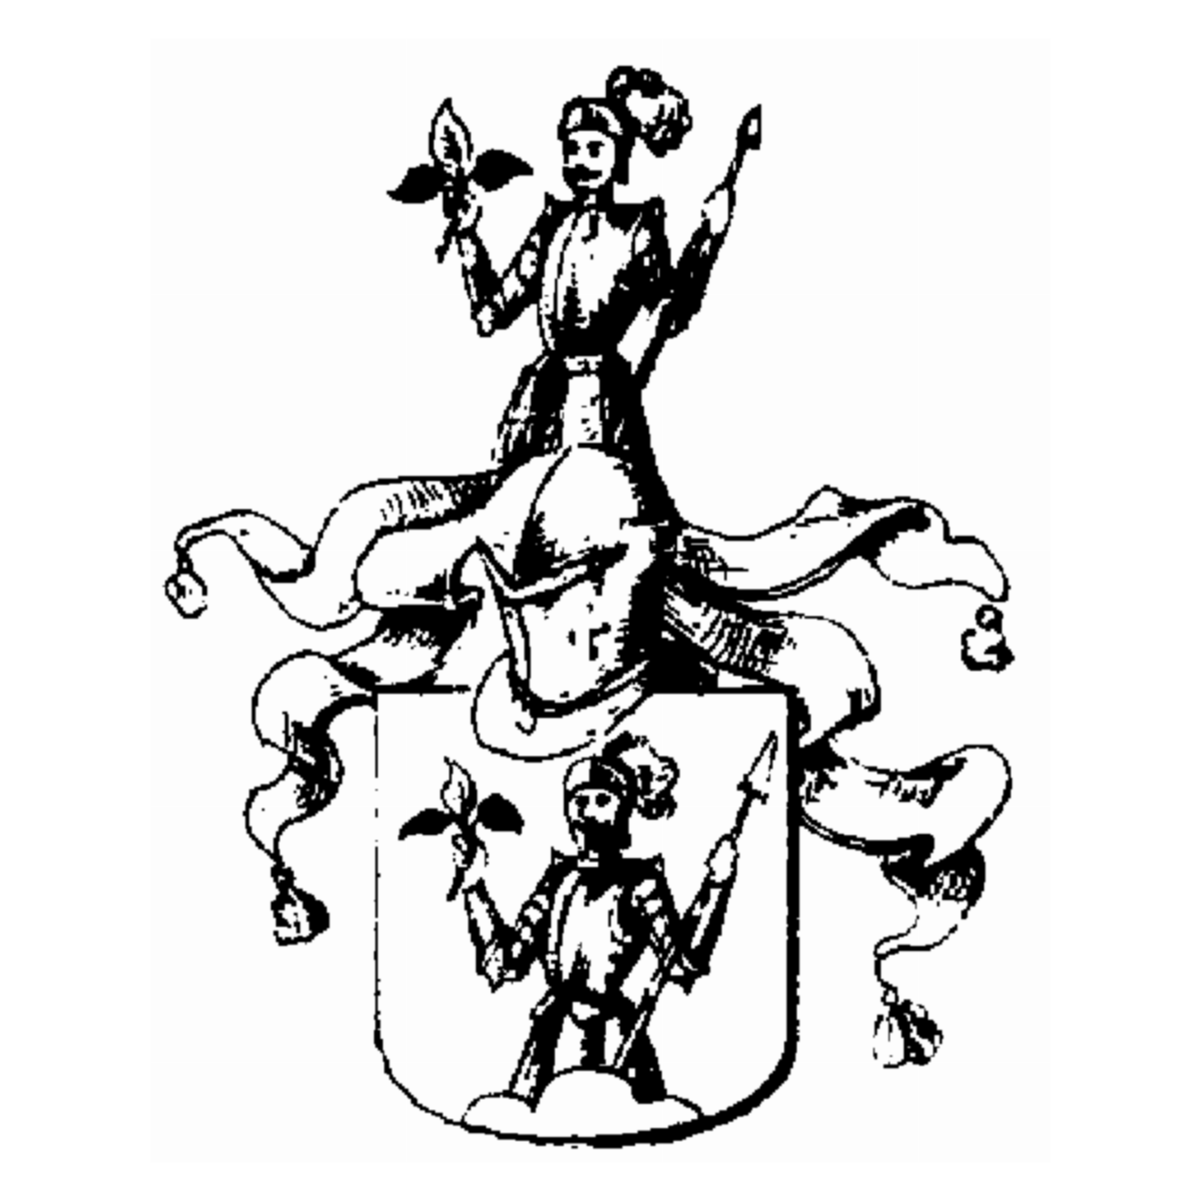 Wappen der Familie Brentano